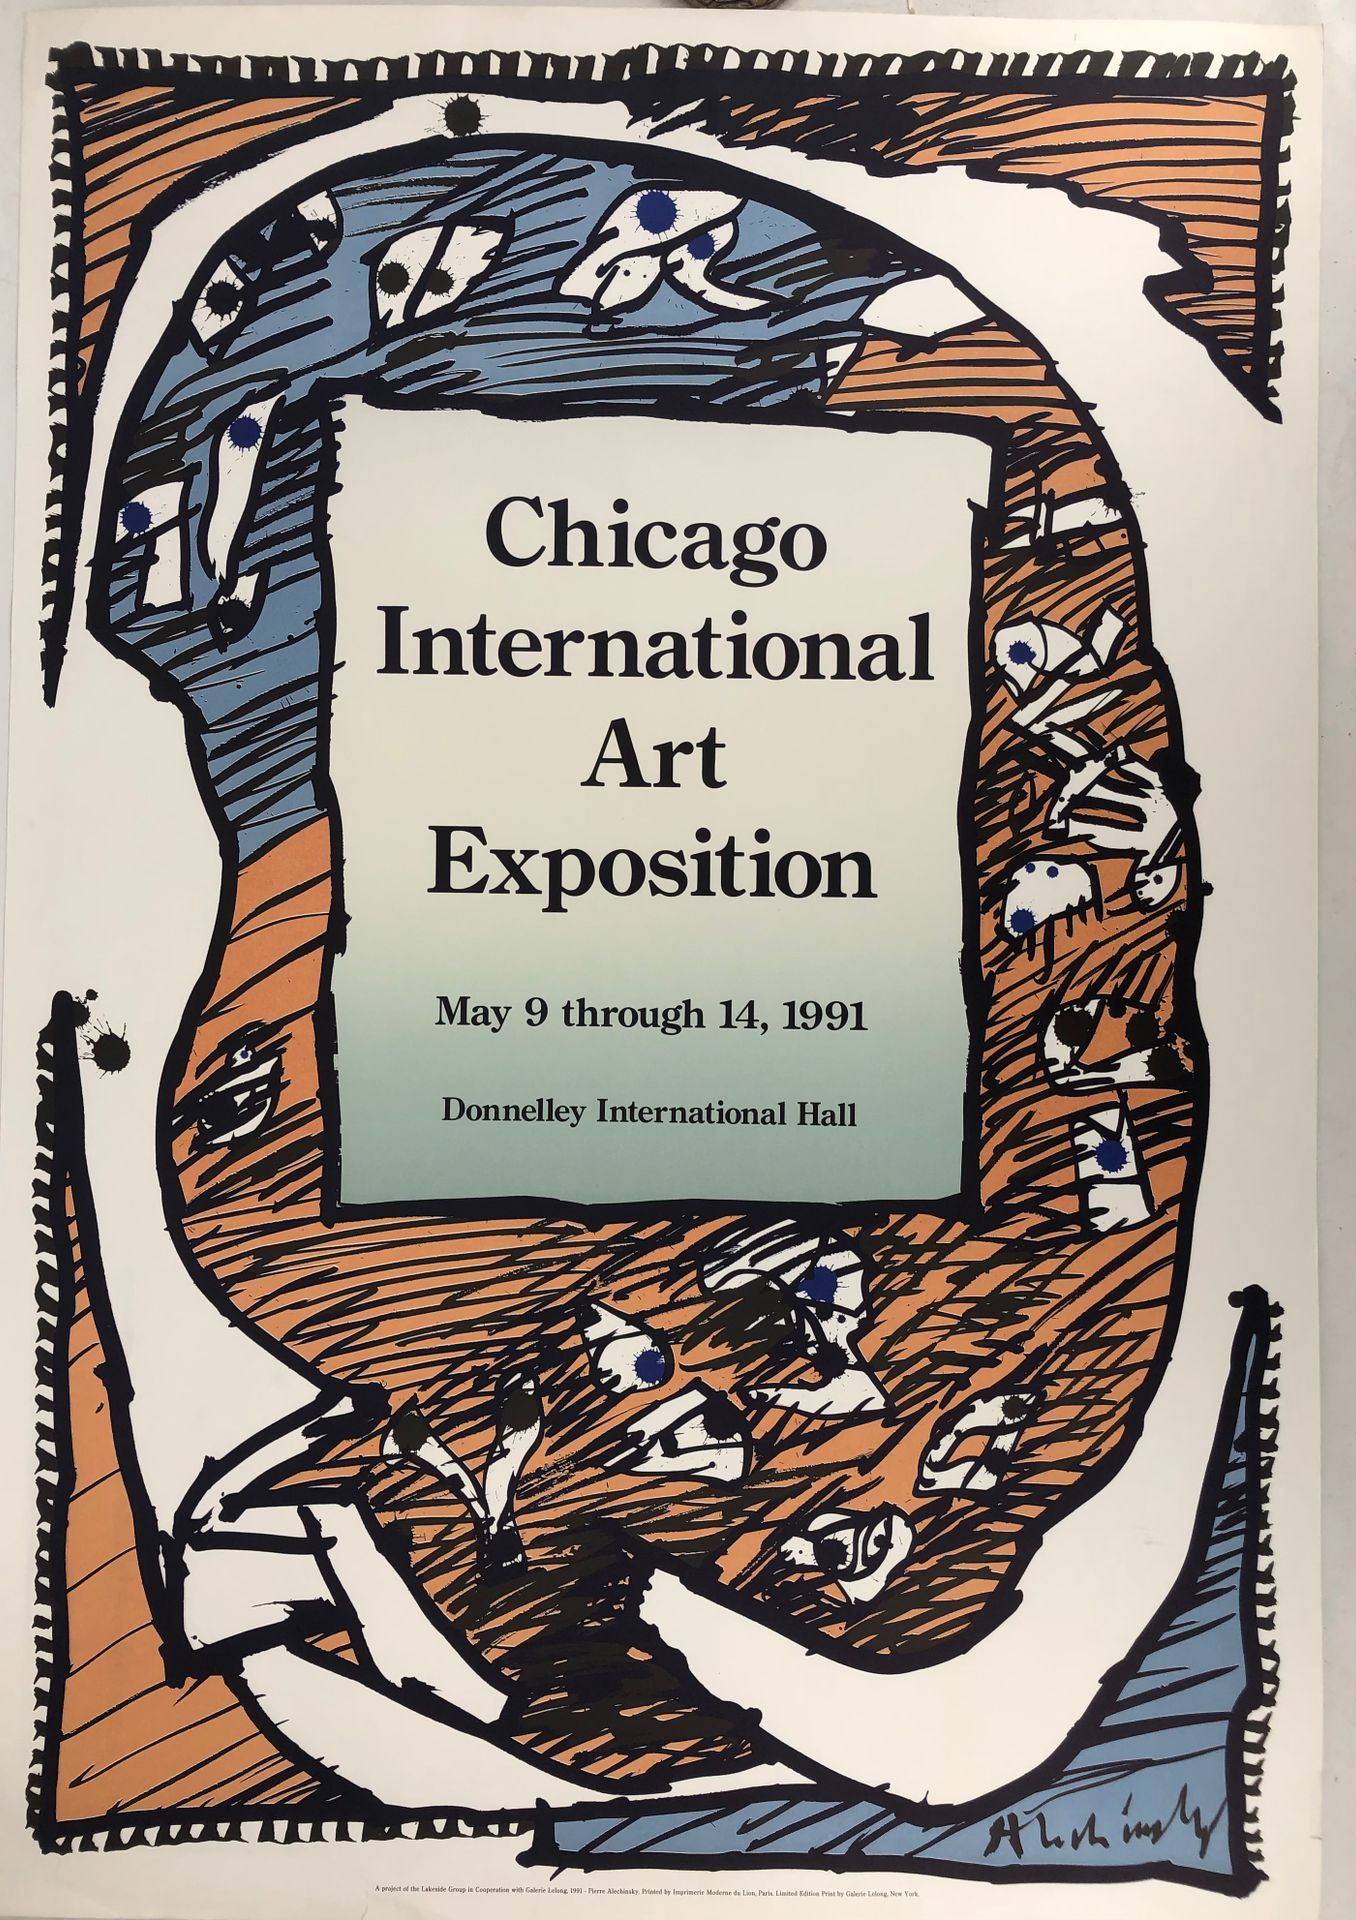 Pierre ALECHINSKY Pierre ALECHINSKY

Chicago International Art exposition

Affic&hellip;